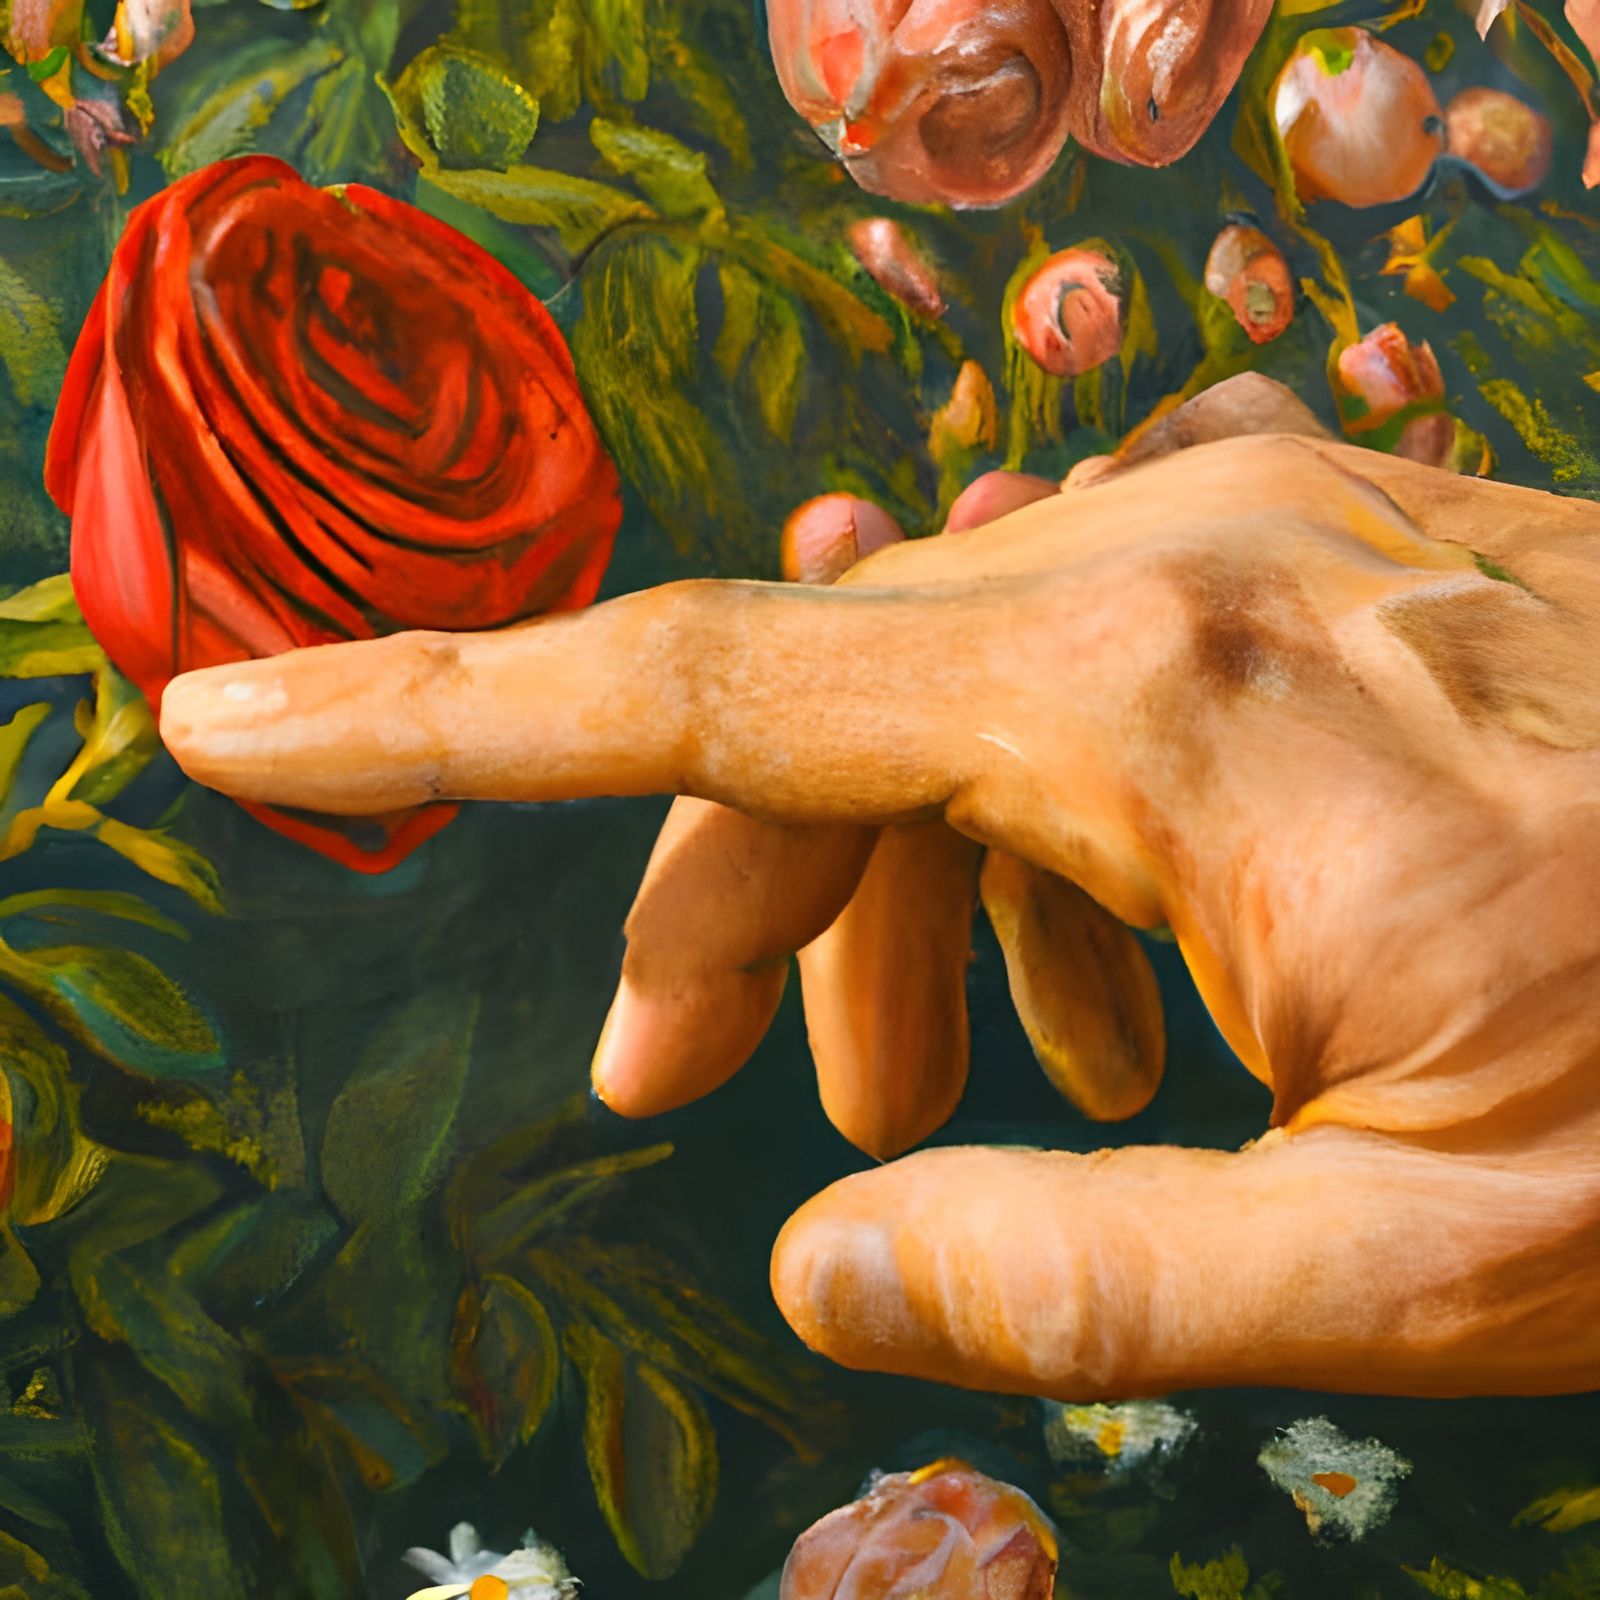 A Hand Touching a Rose by Leonardo da Vinci